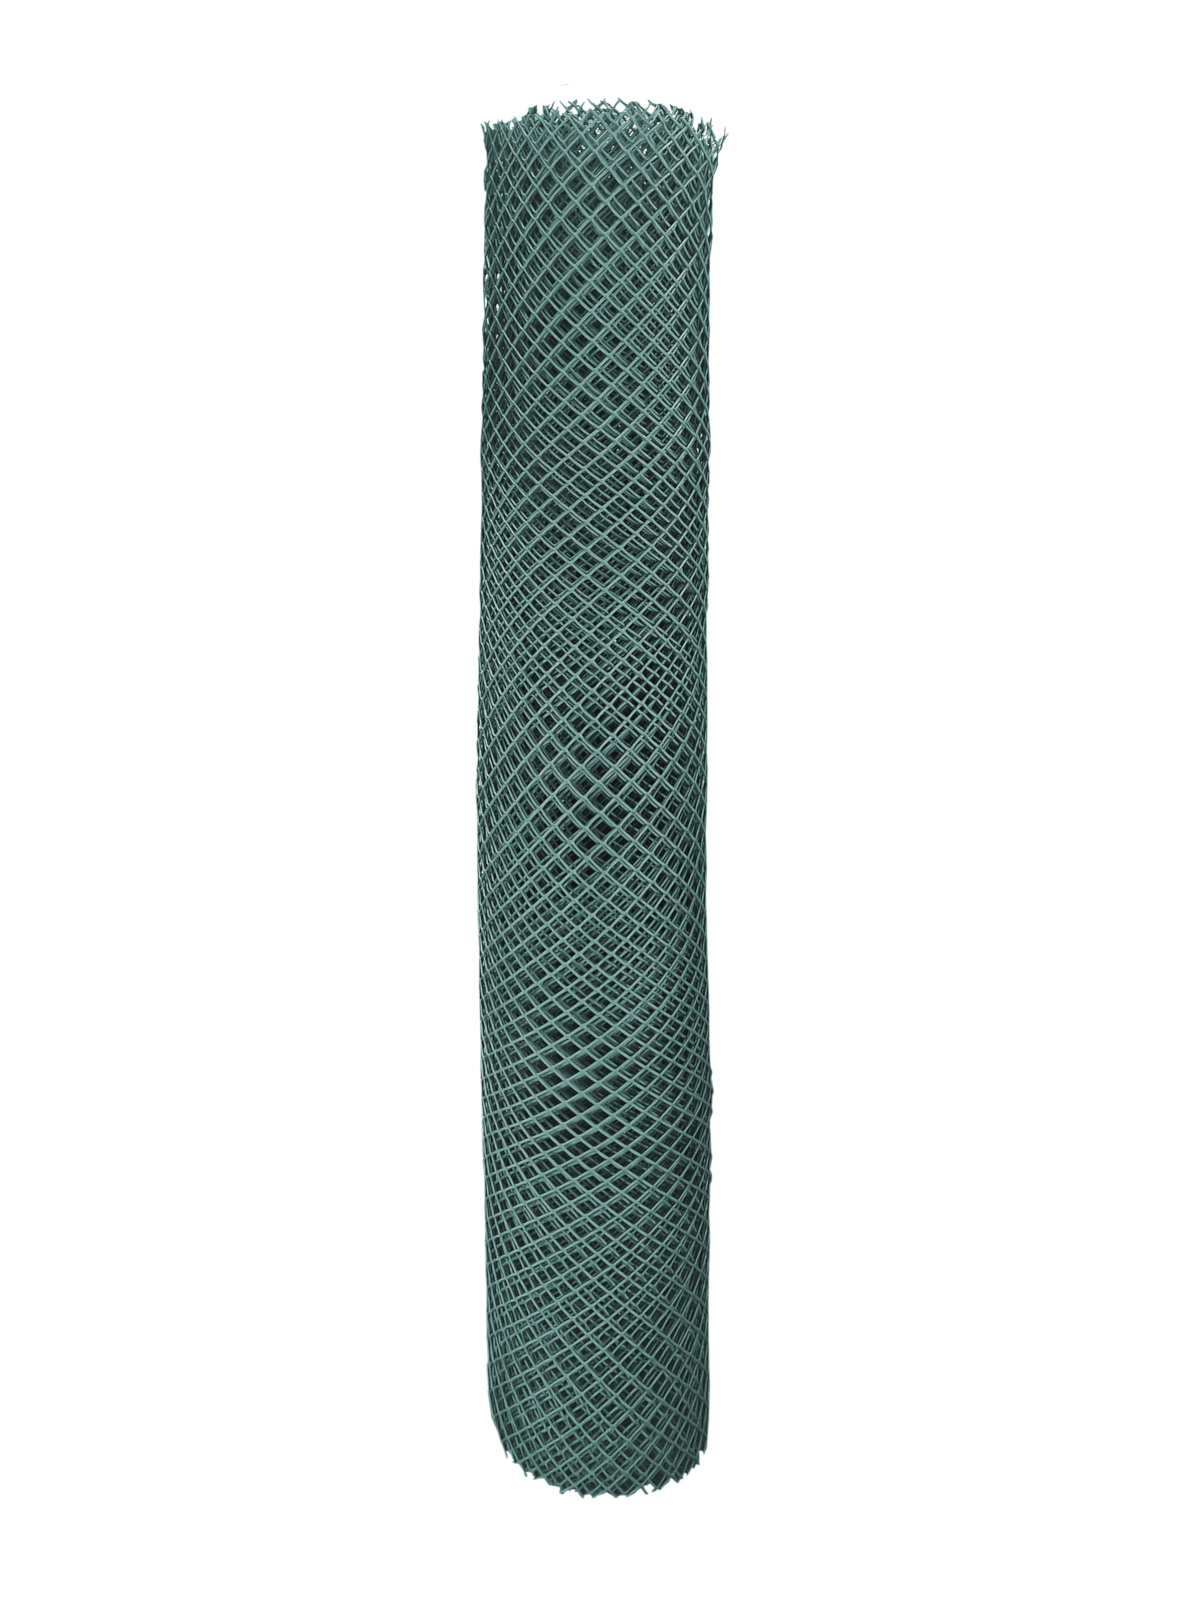 Celoplastové pletivo, oko 17x17mm, výška 125cm POLYNET, bm PLOTY Sklad5 0 8595068446287